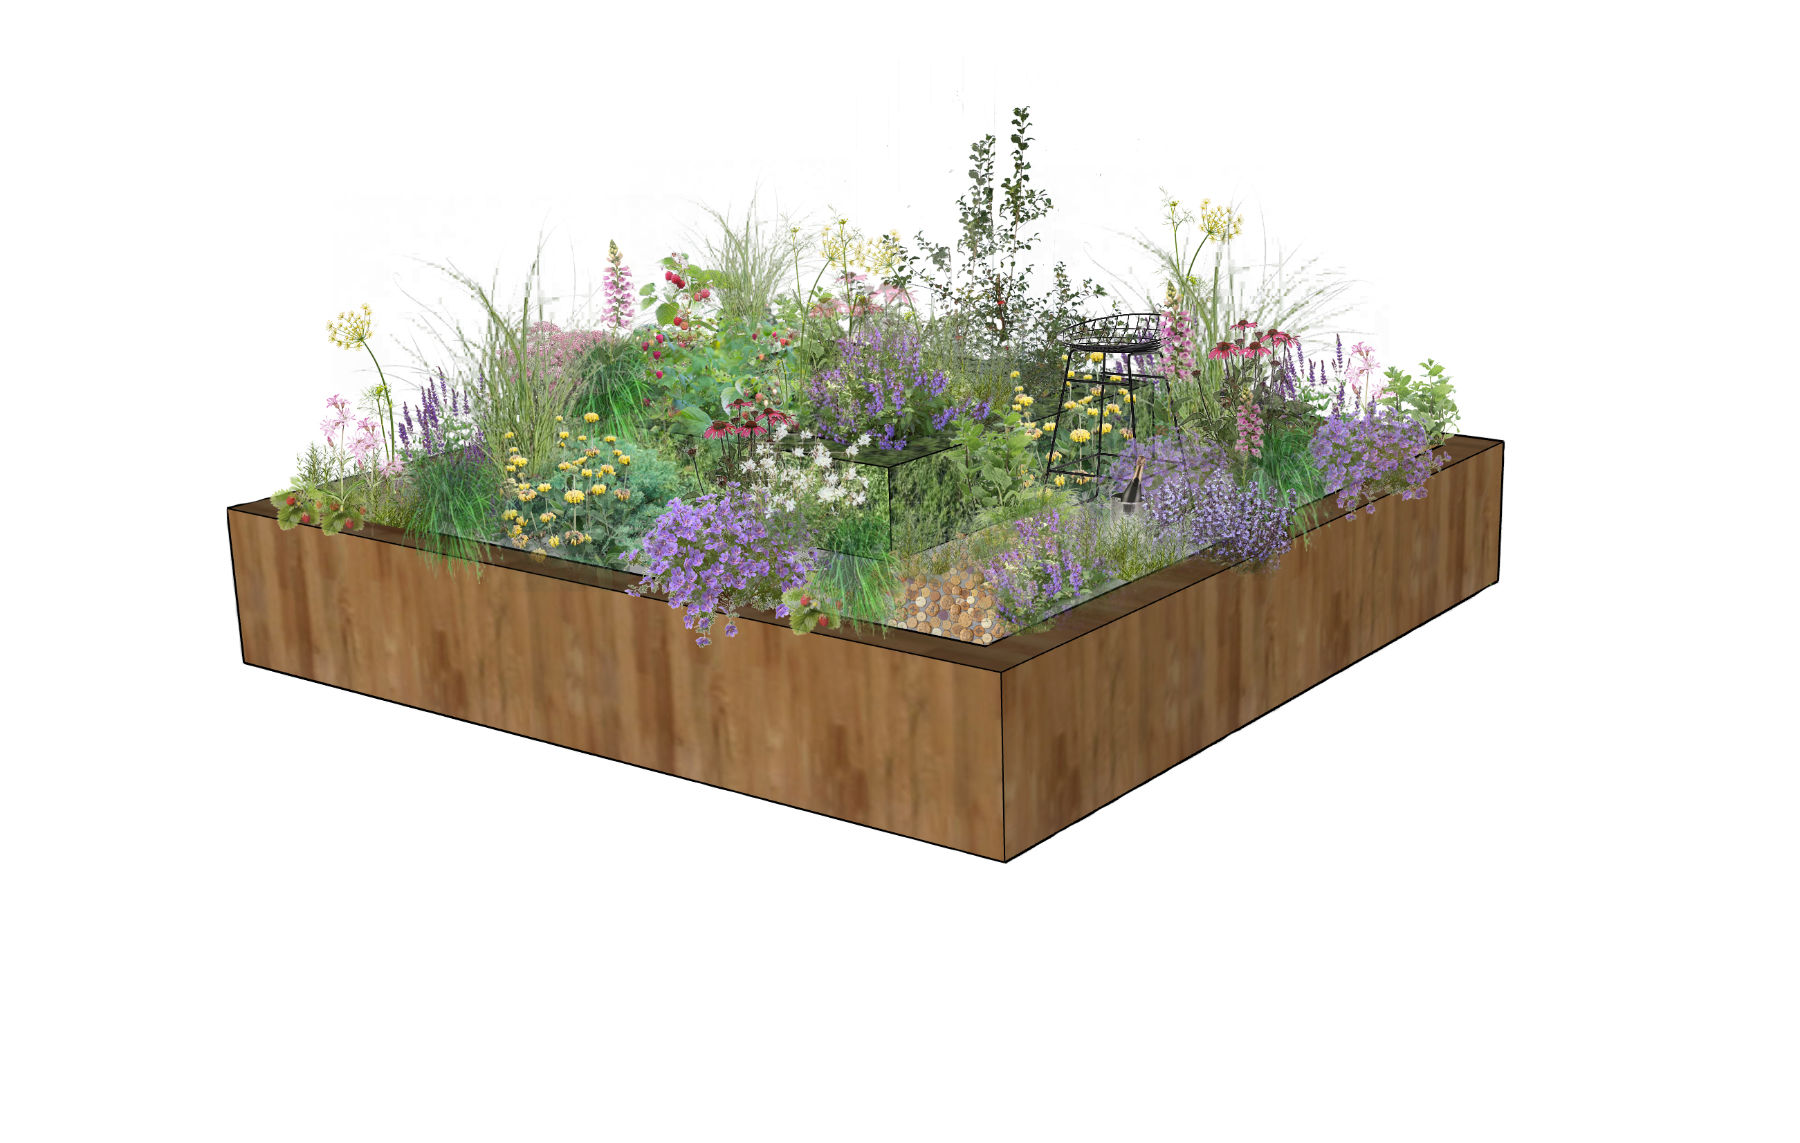 Harrogate garden designer wins silver at BBC Gardener's World Live and donates winning garden to Harrogate Hospital